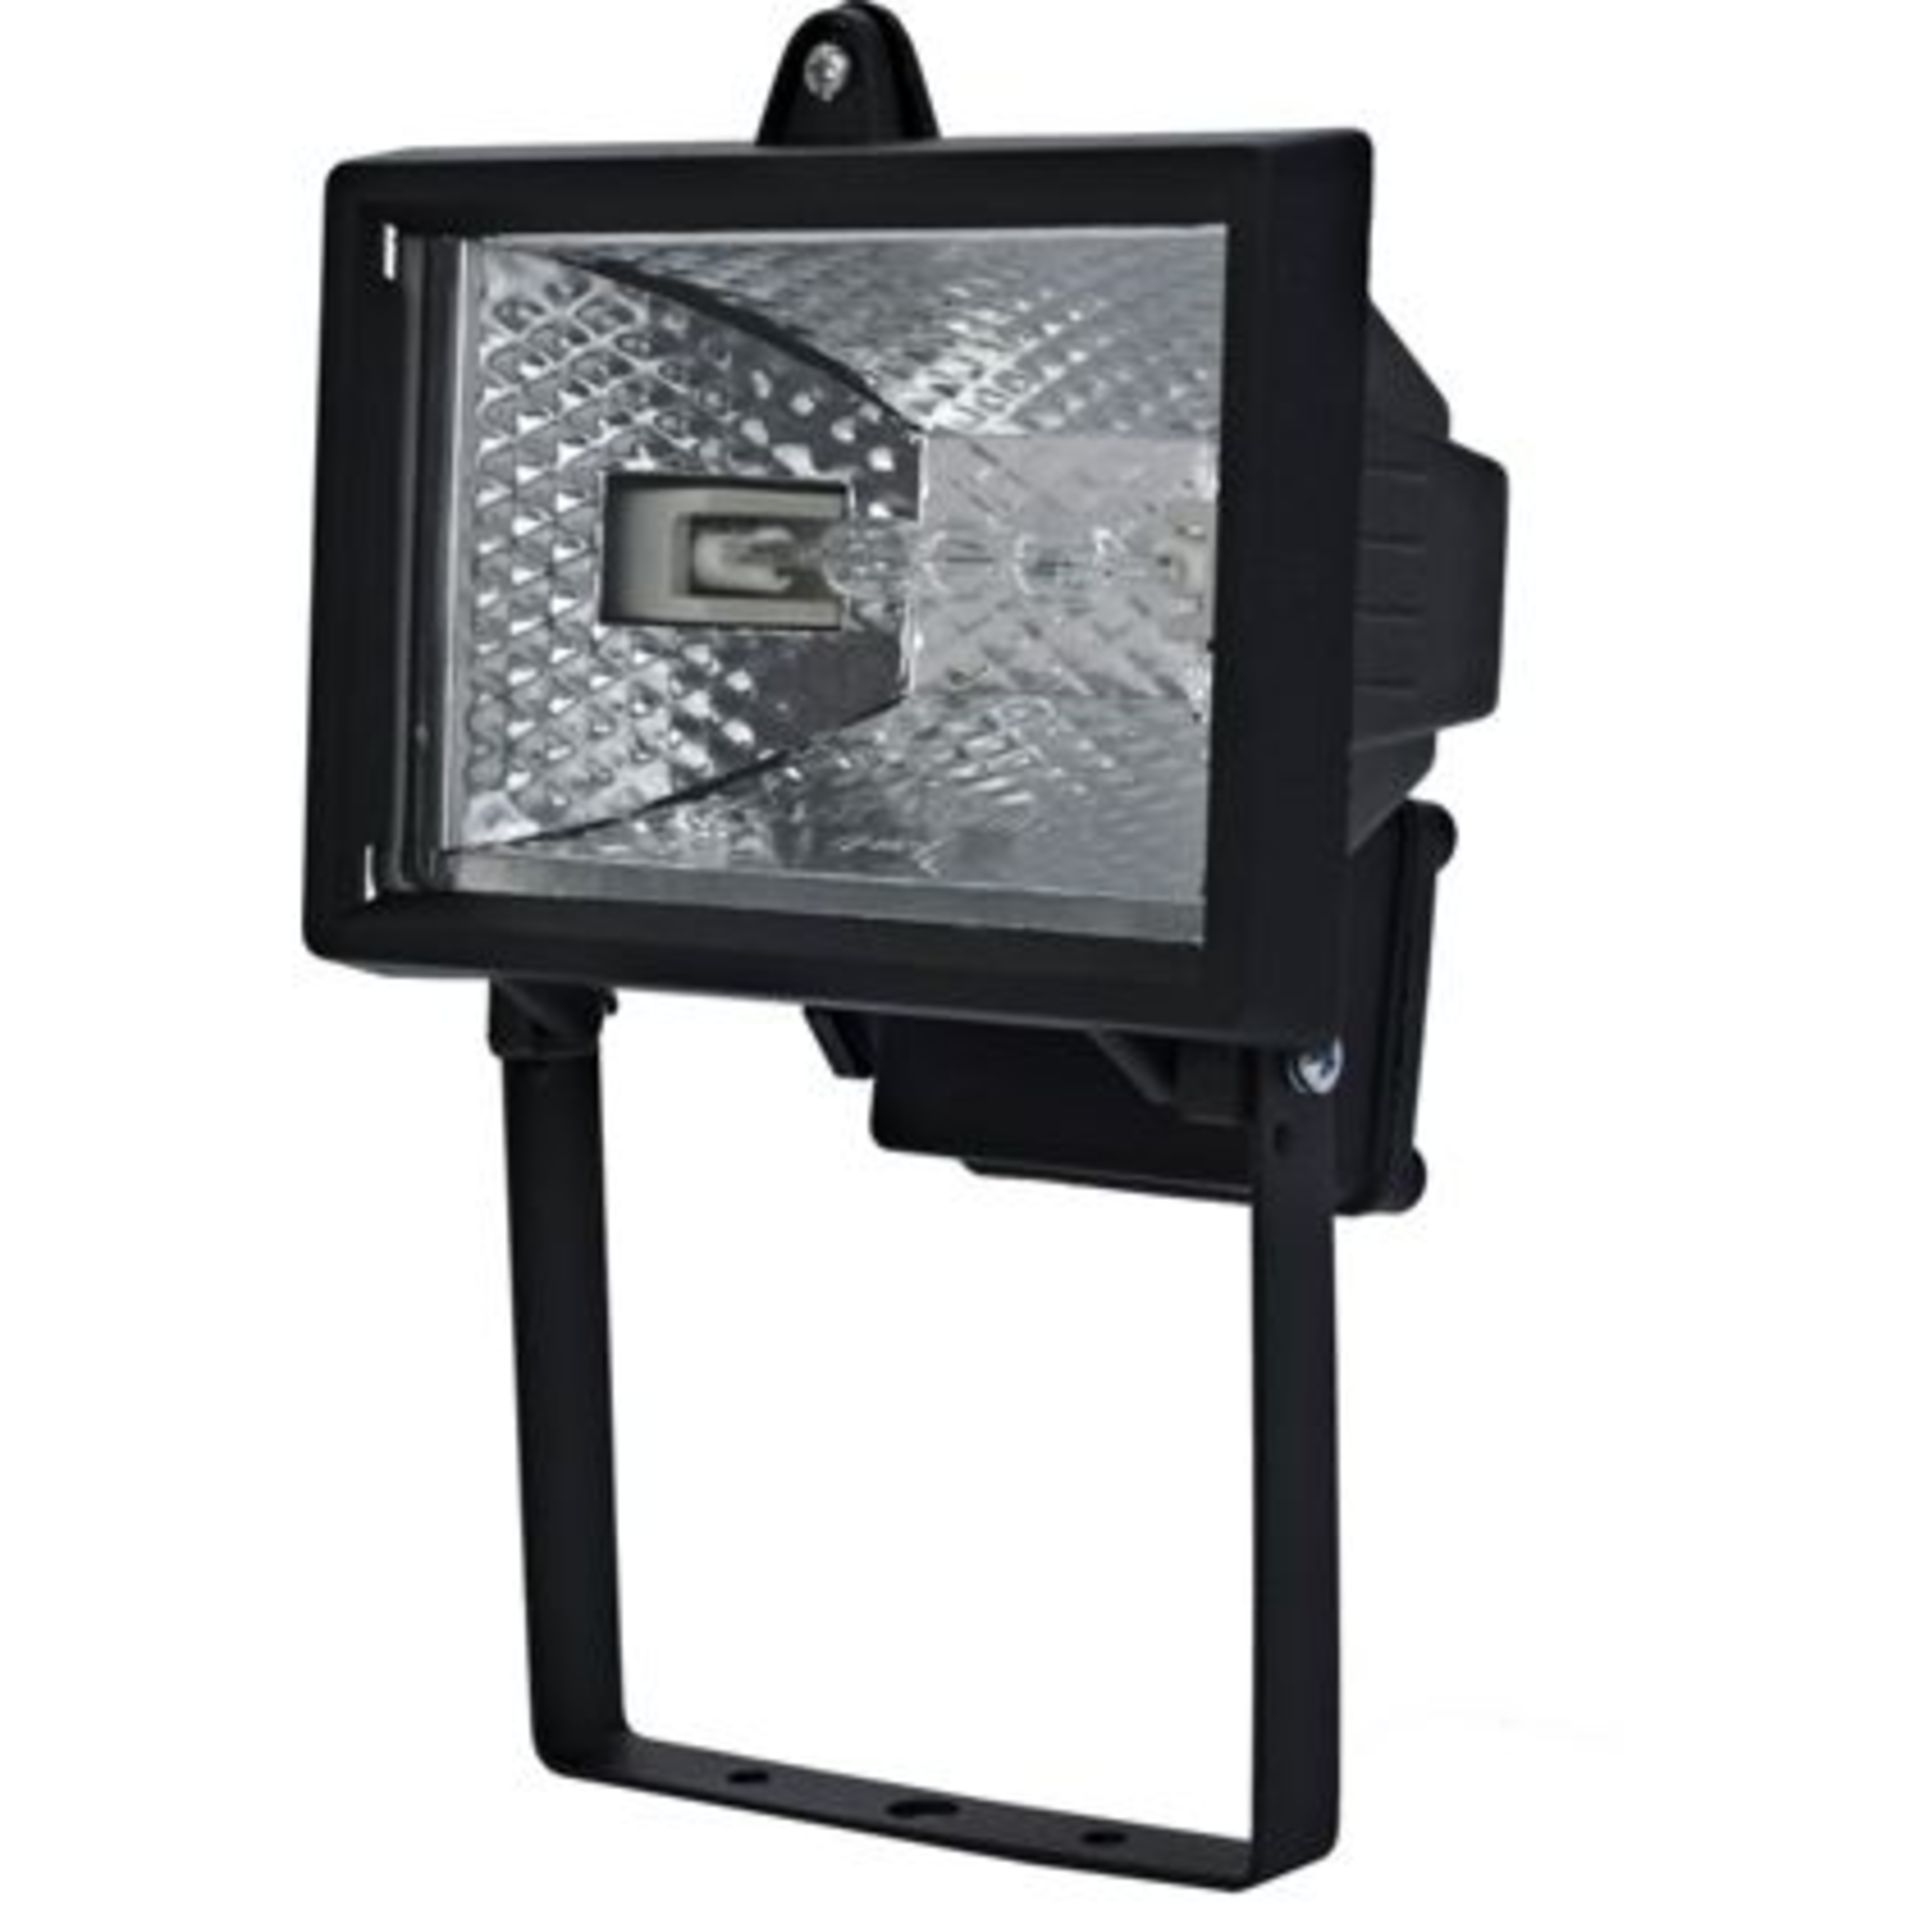 (A198) 3 x 120w Aluminium Outdoor Floodlights - Black. 120W Floodlight is an ideal way to light your